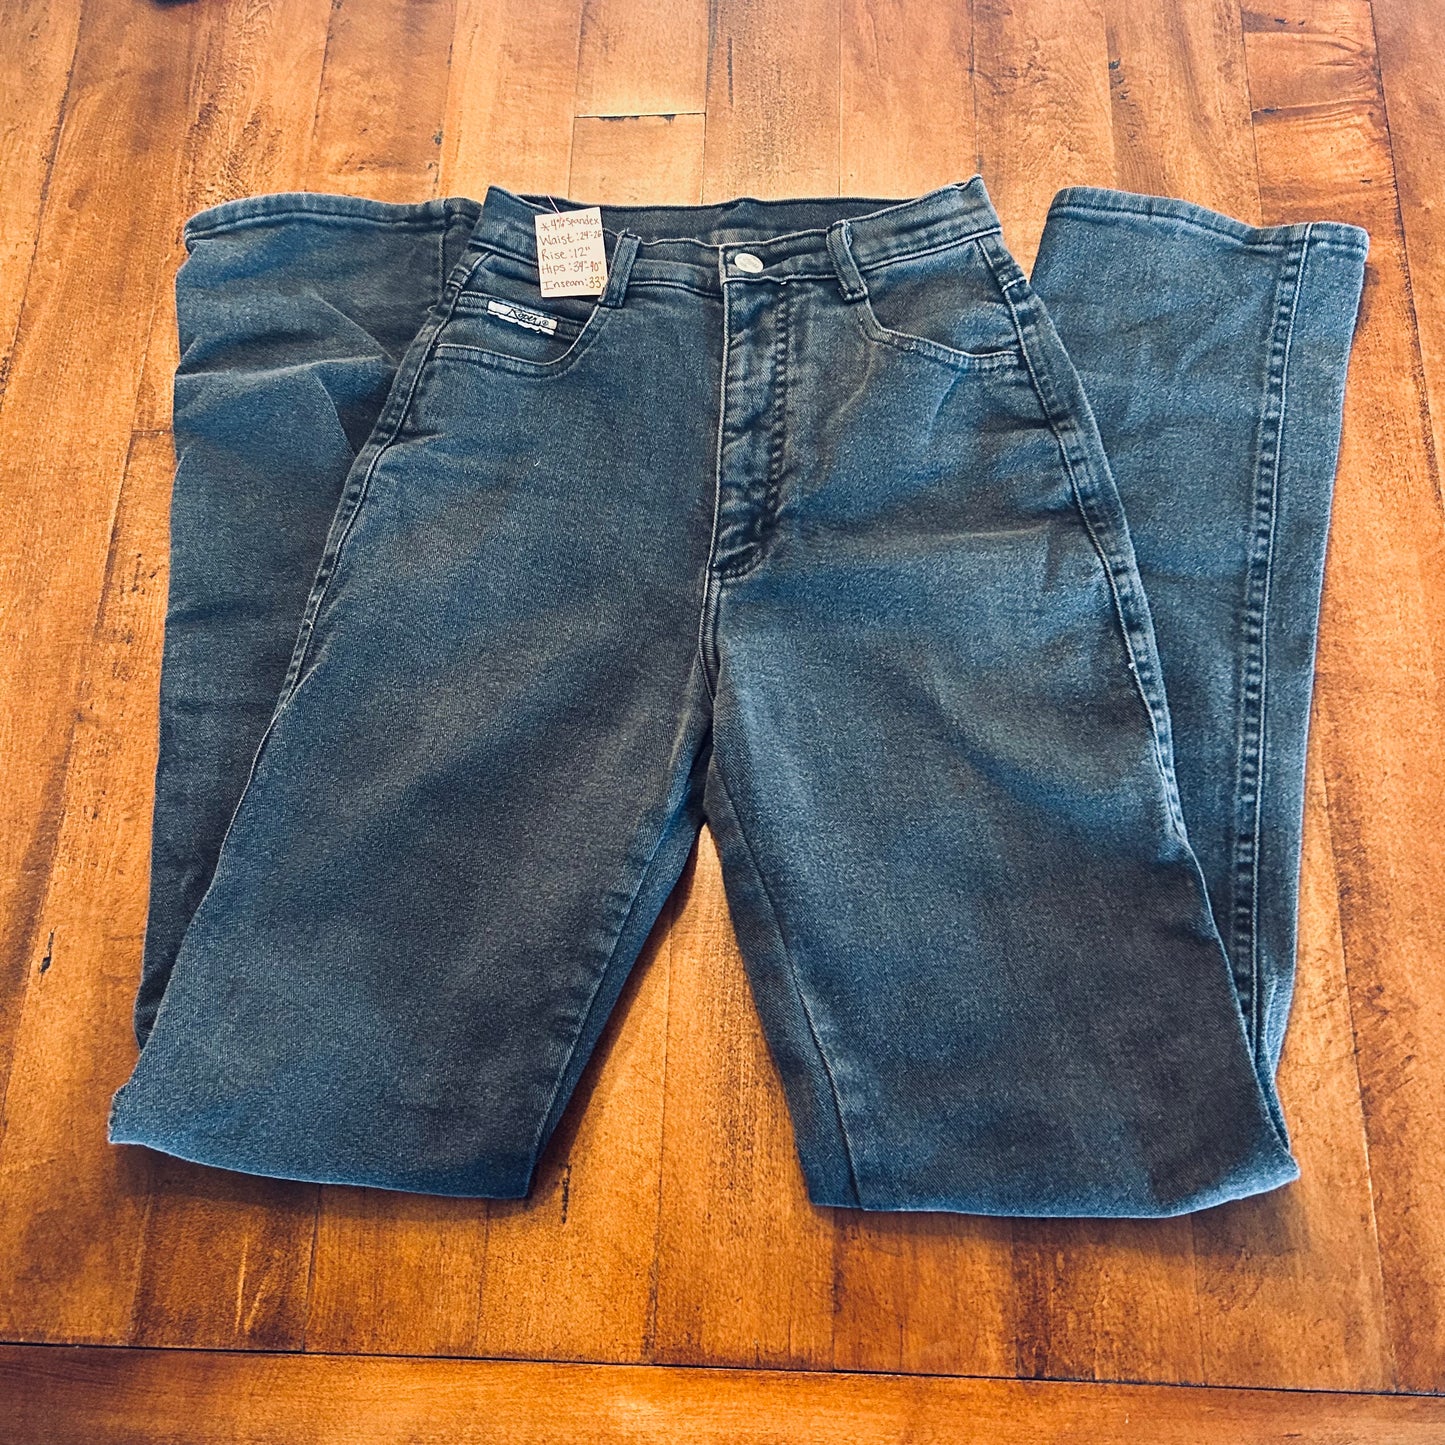 Vintage Roper Black Jeans with 4% Spandex Size 24-26x33